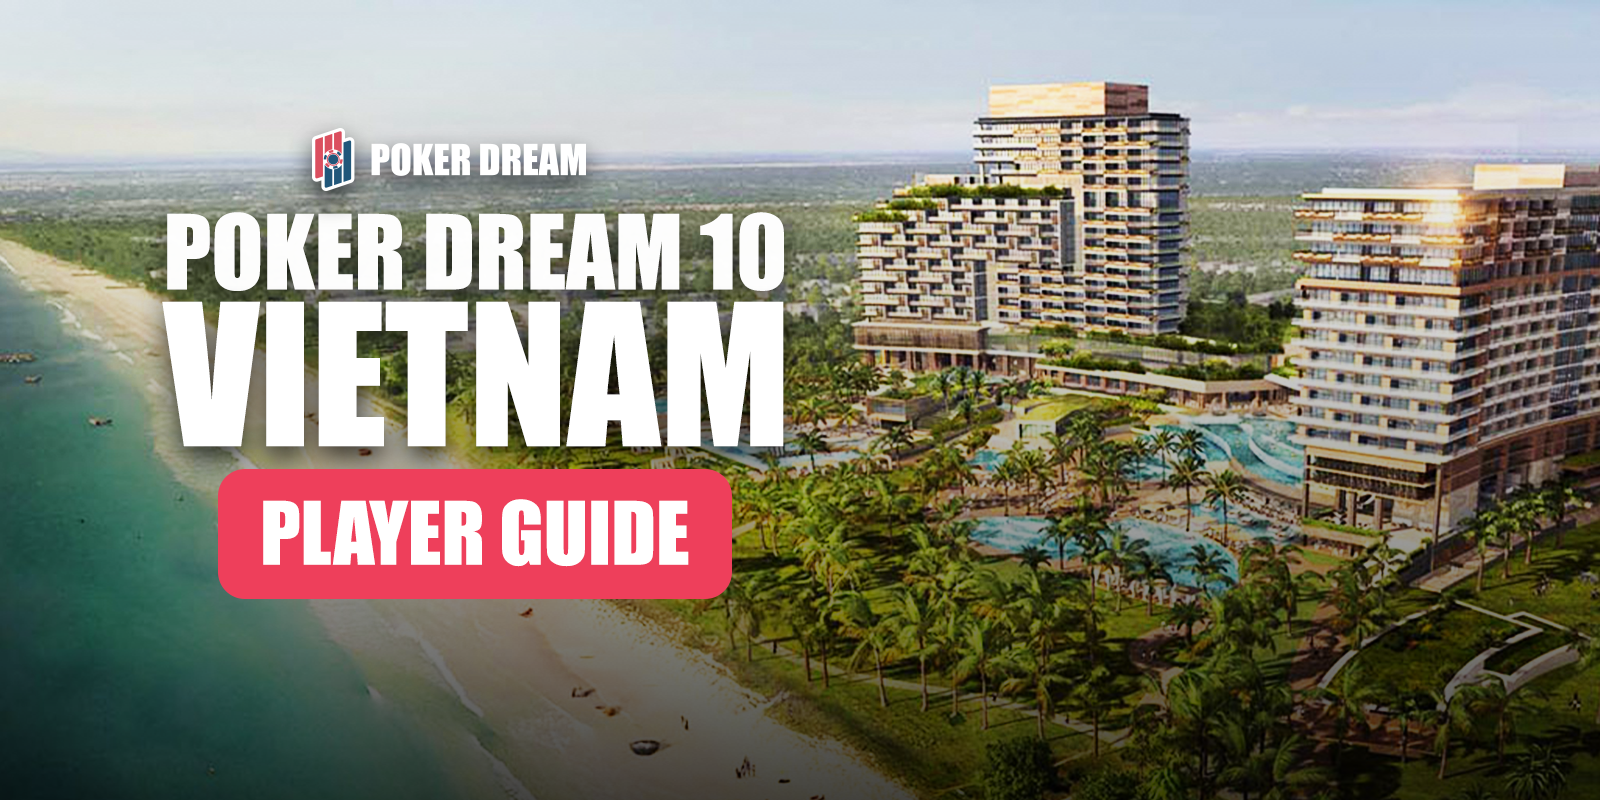 Player’s Guide to Poker Dream 10 Vietnam at Hoiana Resort & Golf